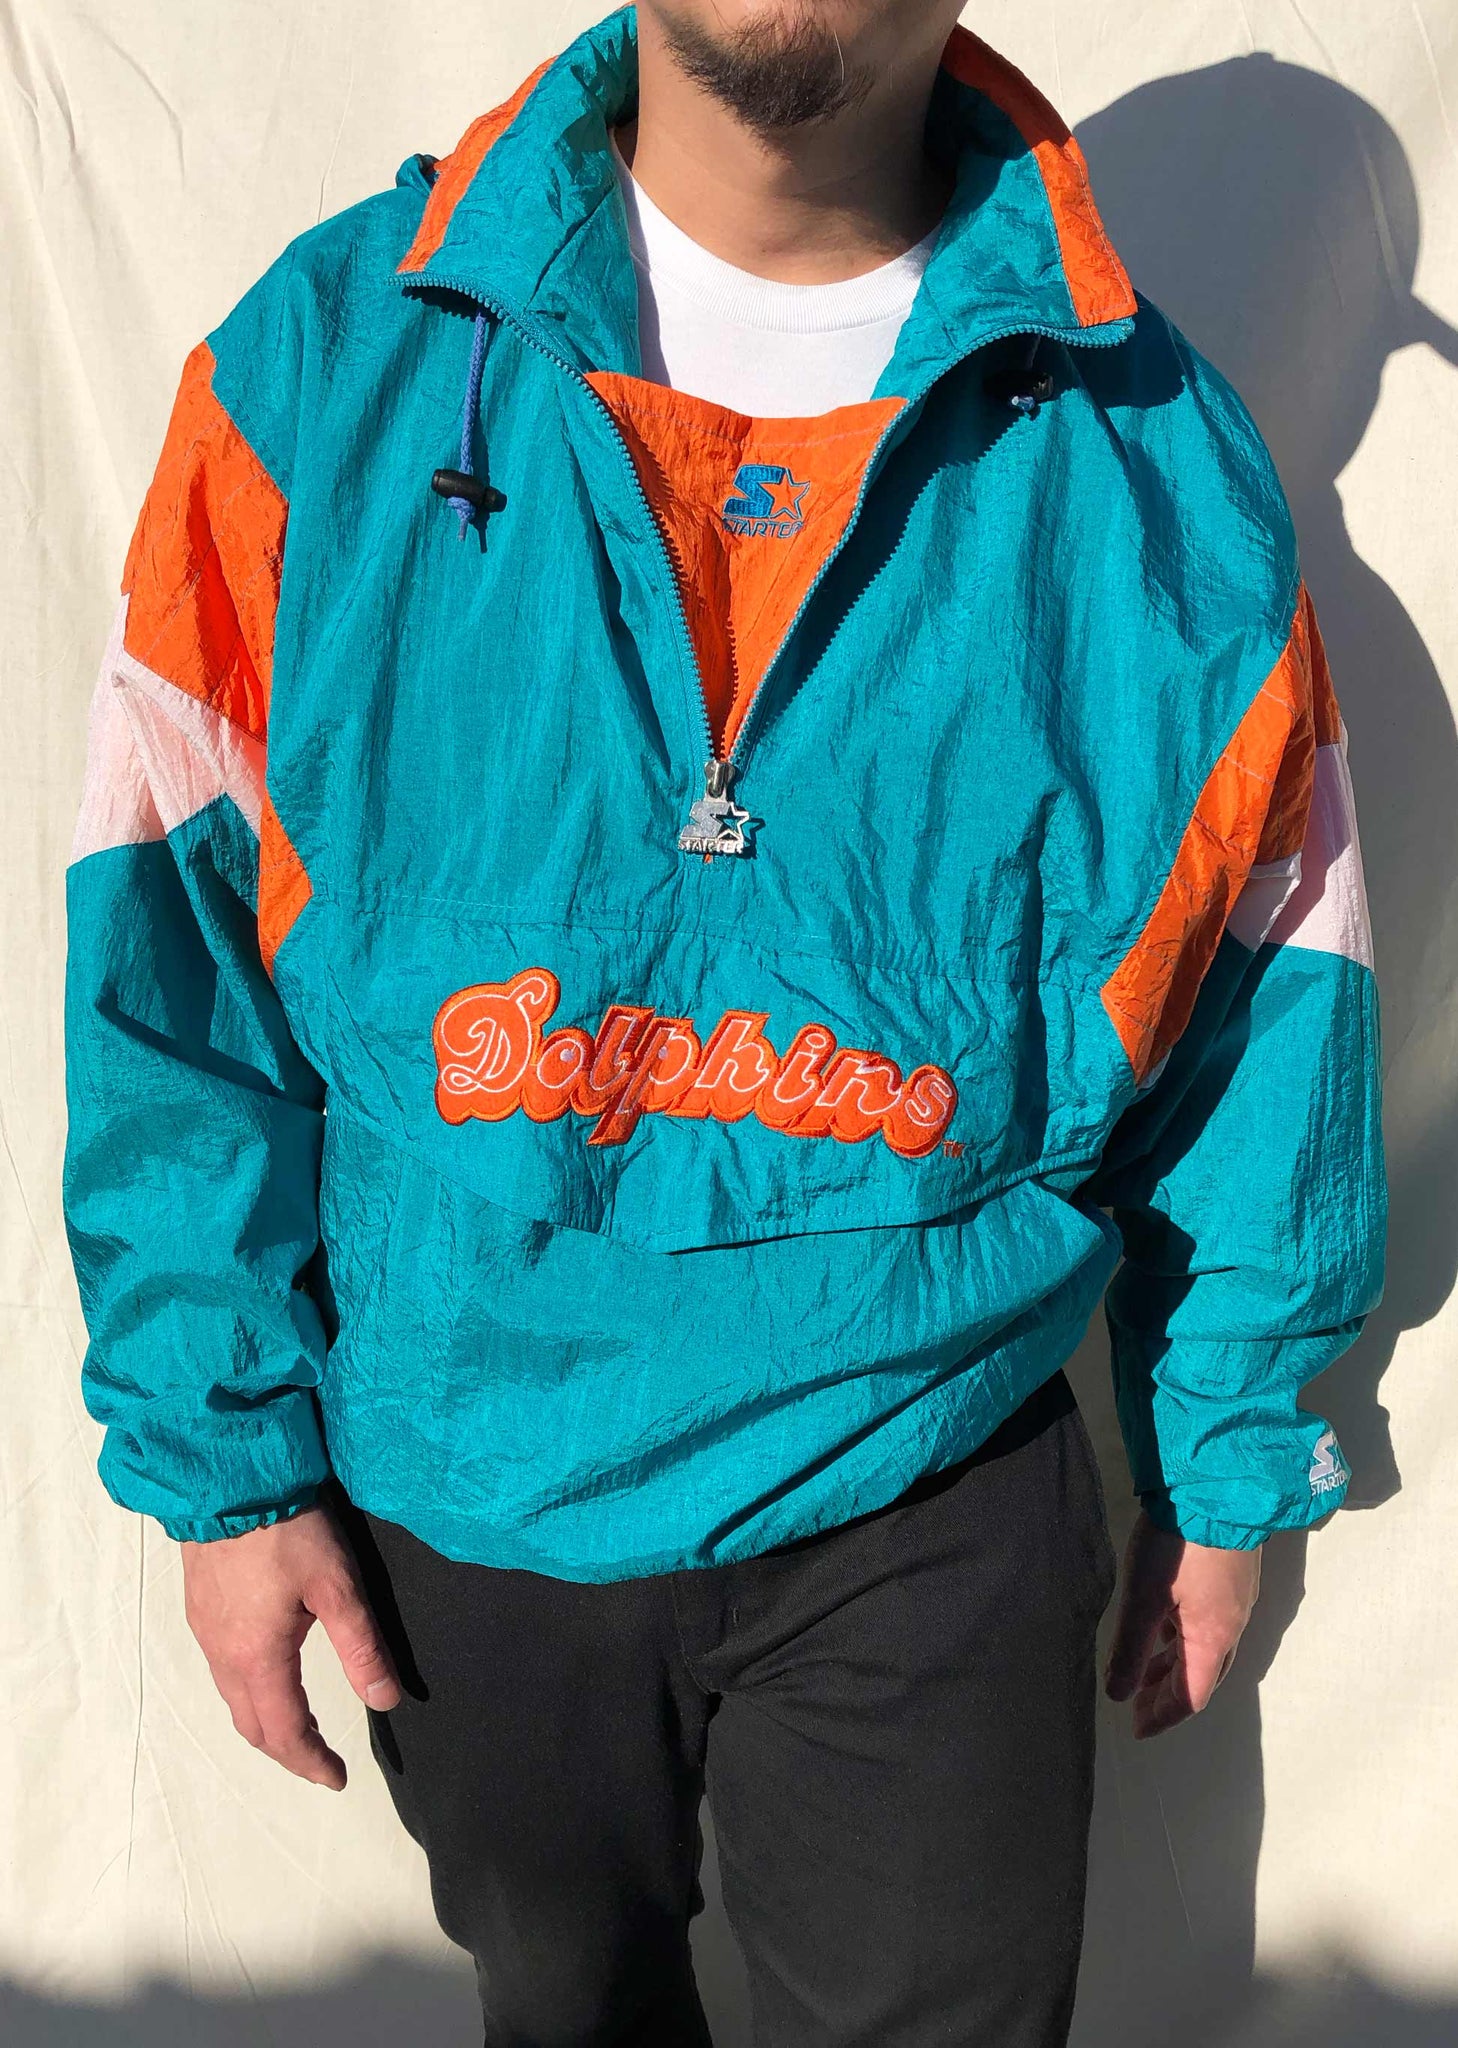 90's nfl starter jackets